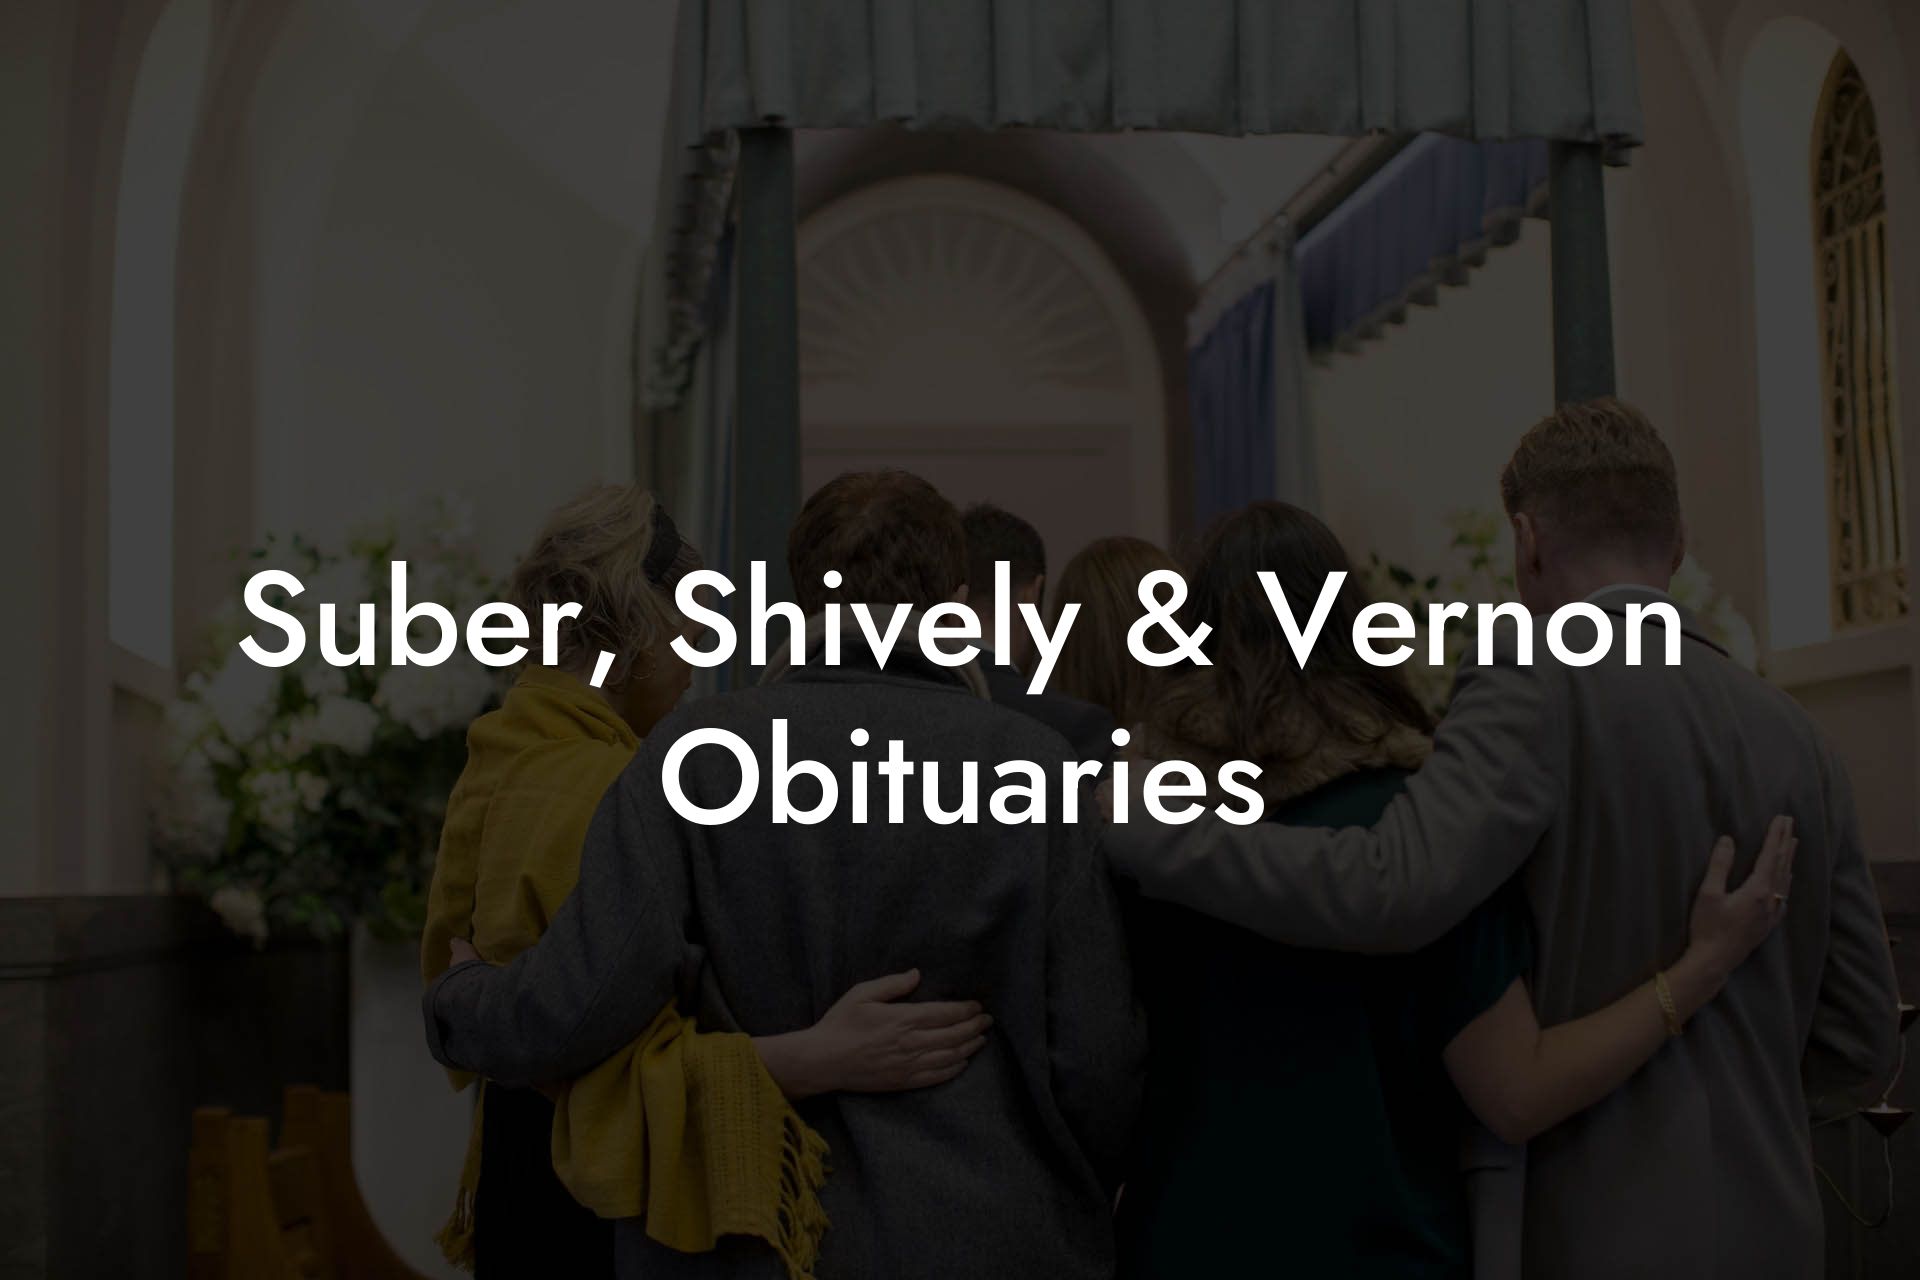 Suber, Shively & Vernon Obituaries